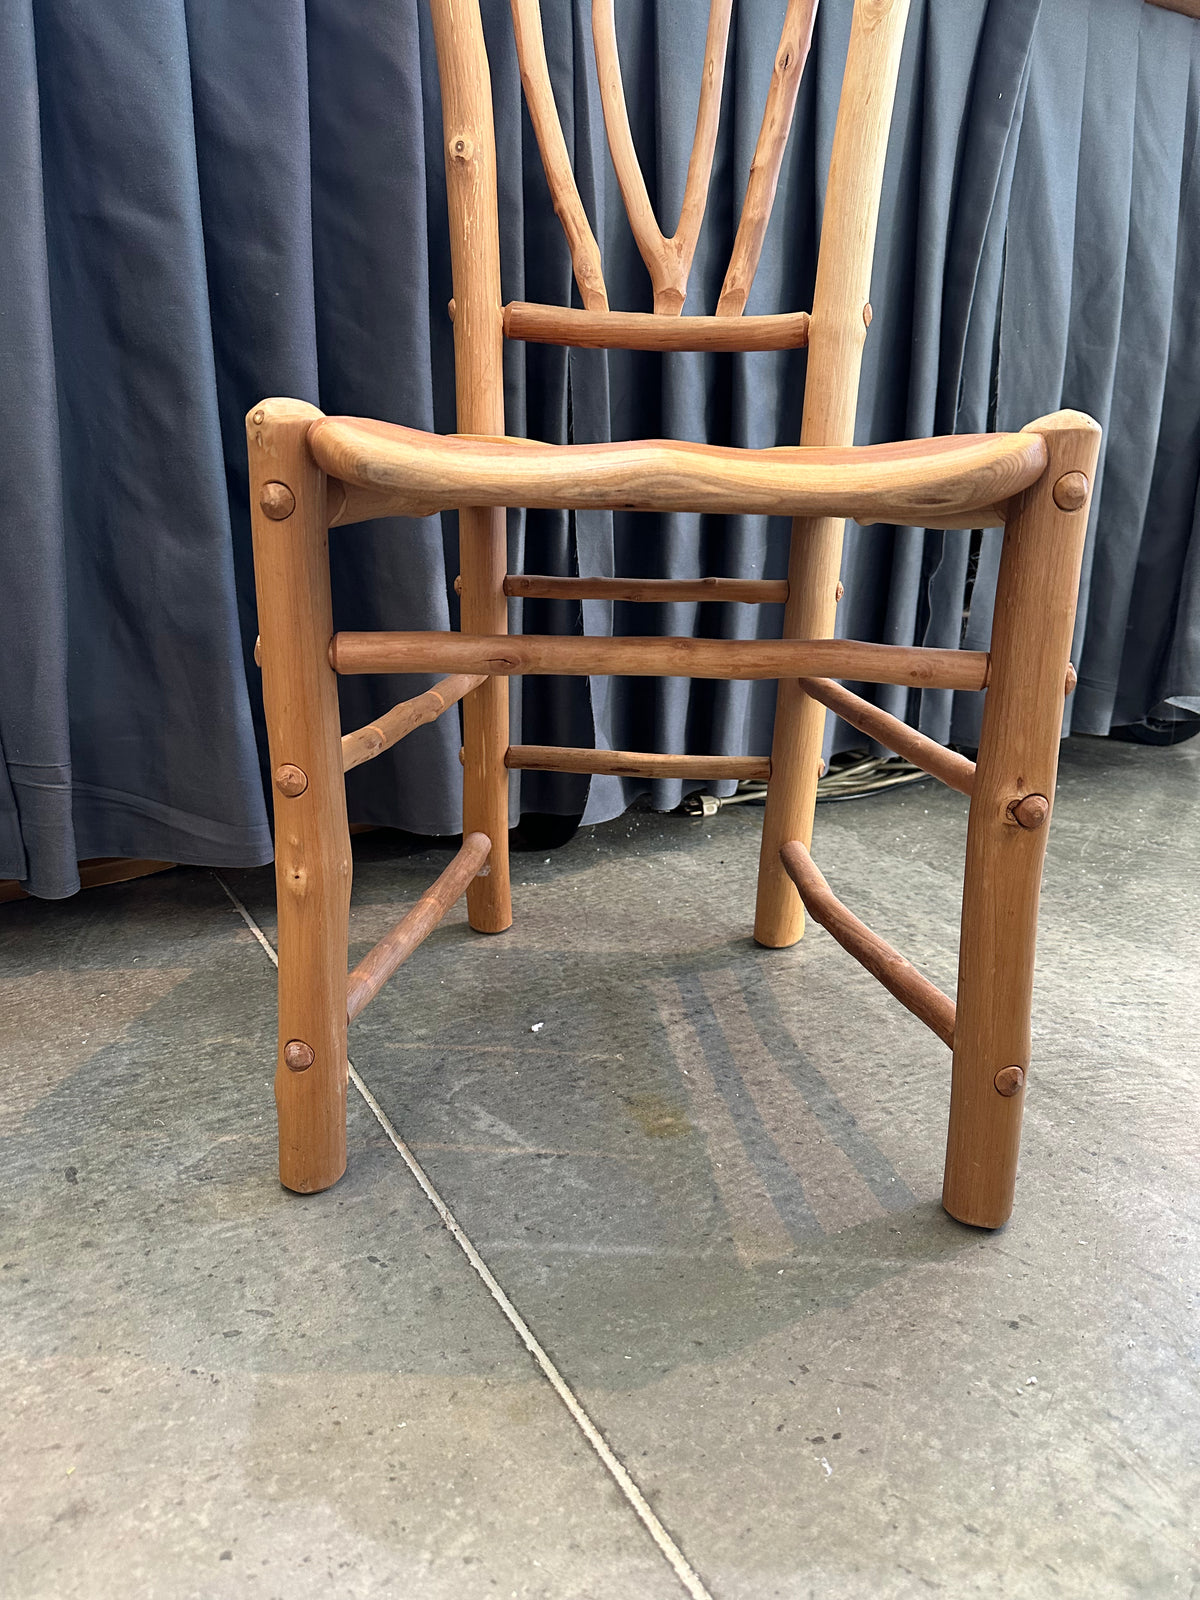 Lake Placid Lodge Chair Rustic Chair